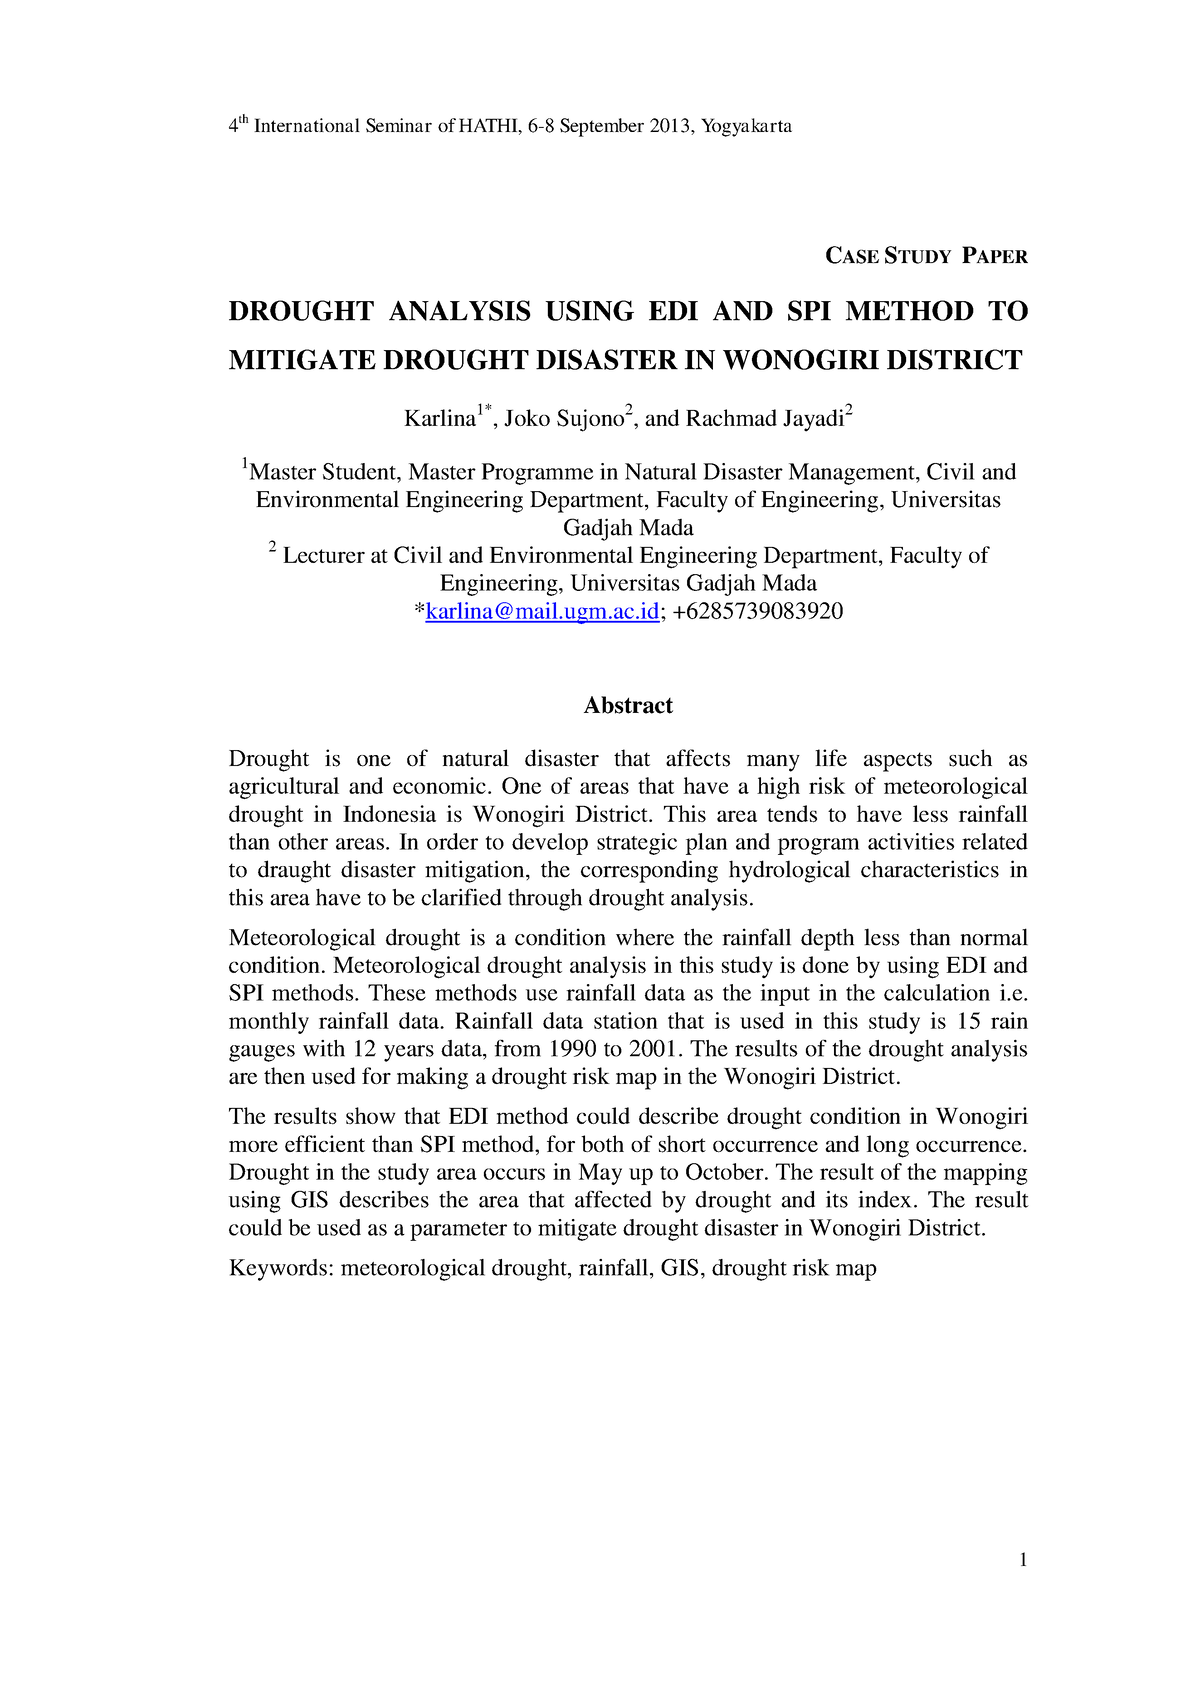 drought analysis case study